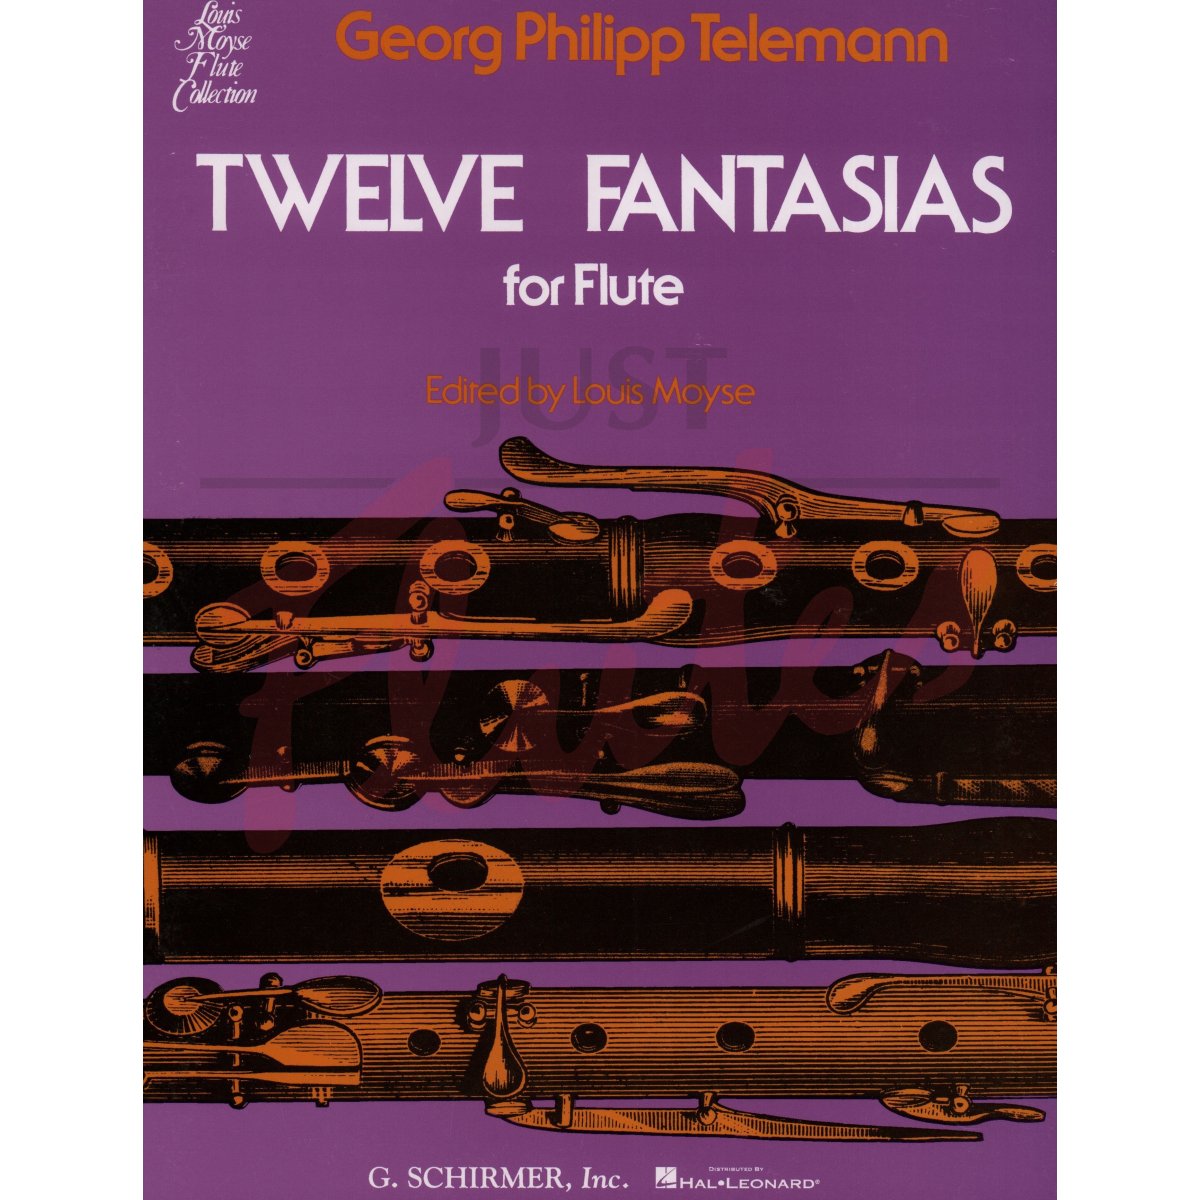 Twelve Fantasias for Flute